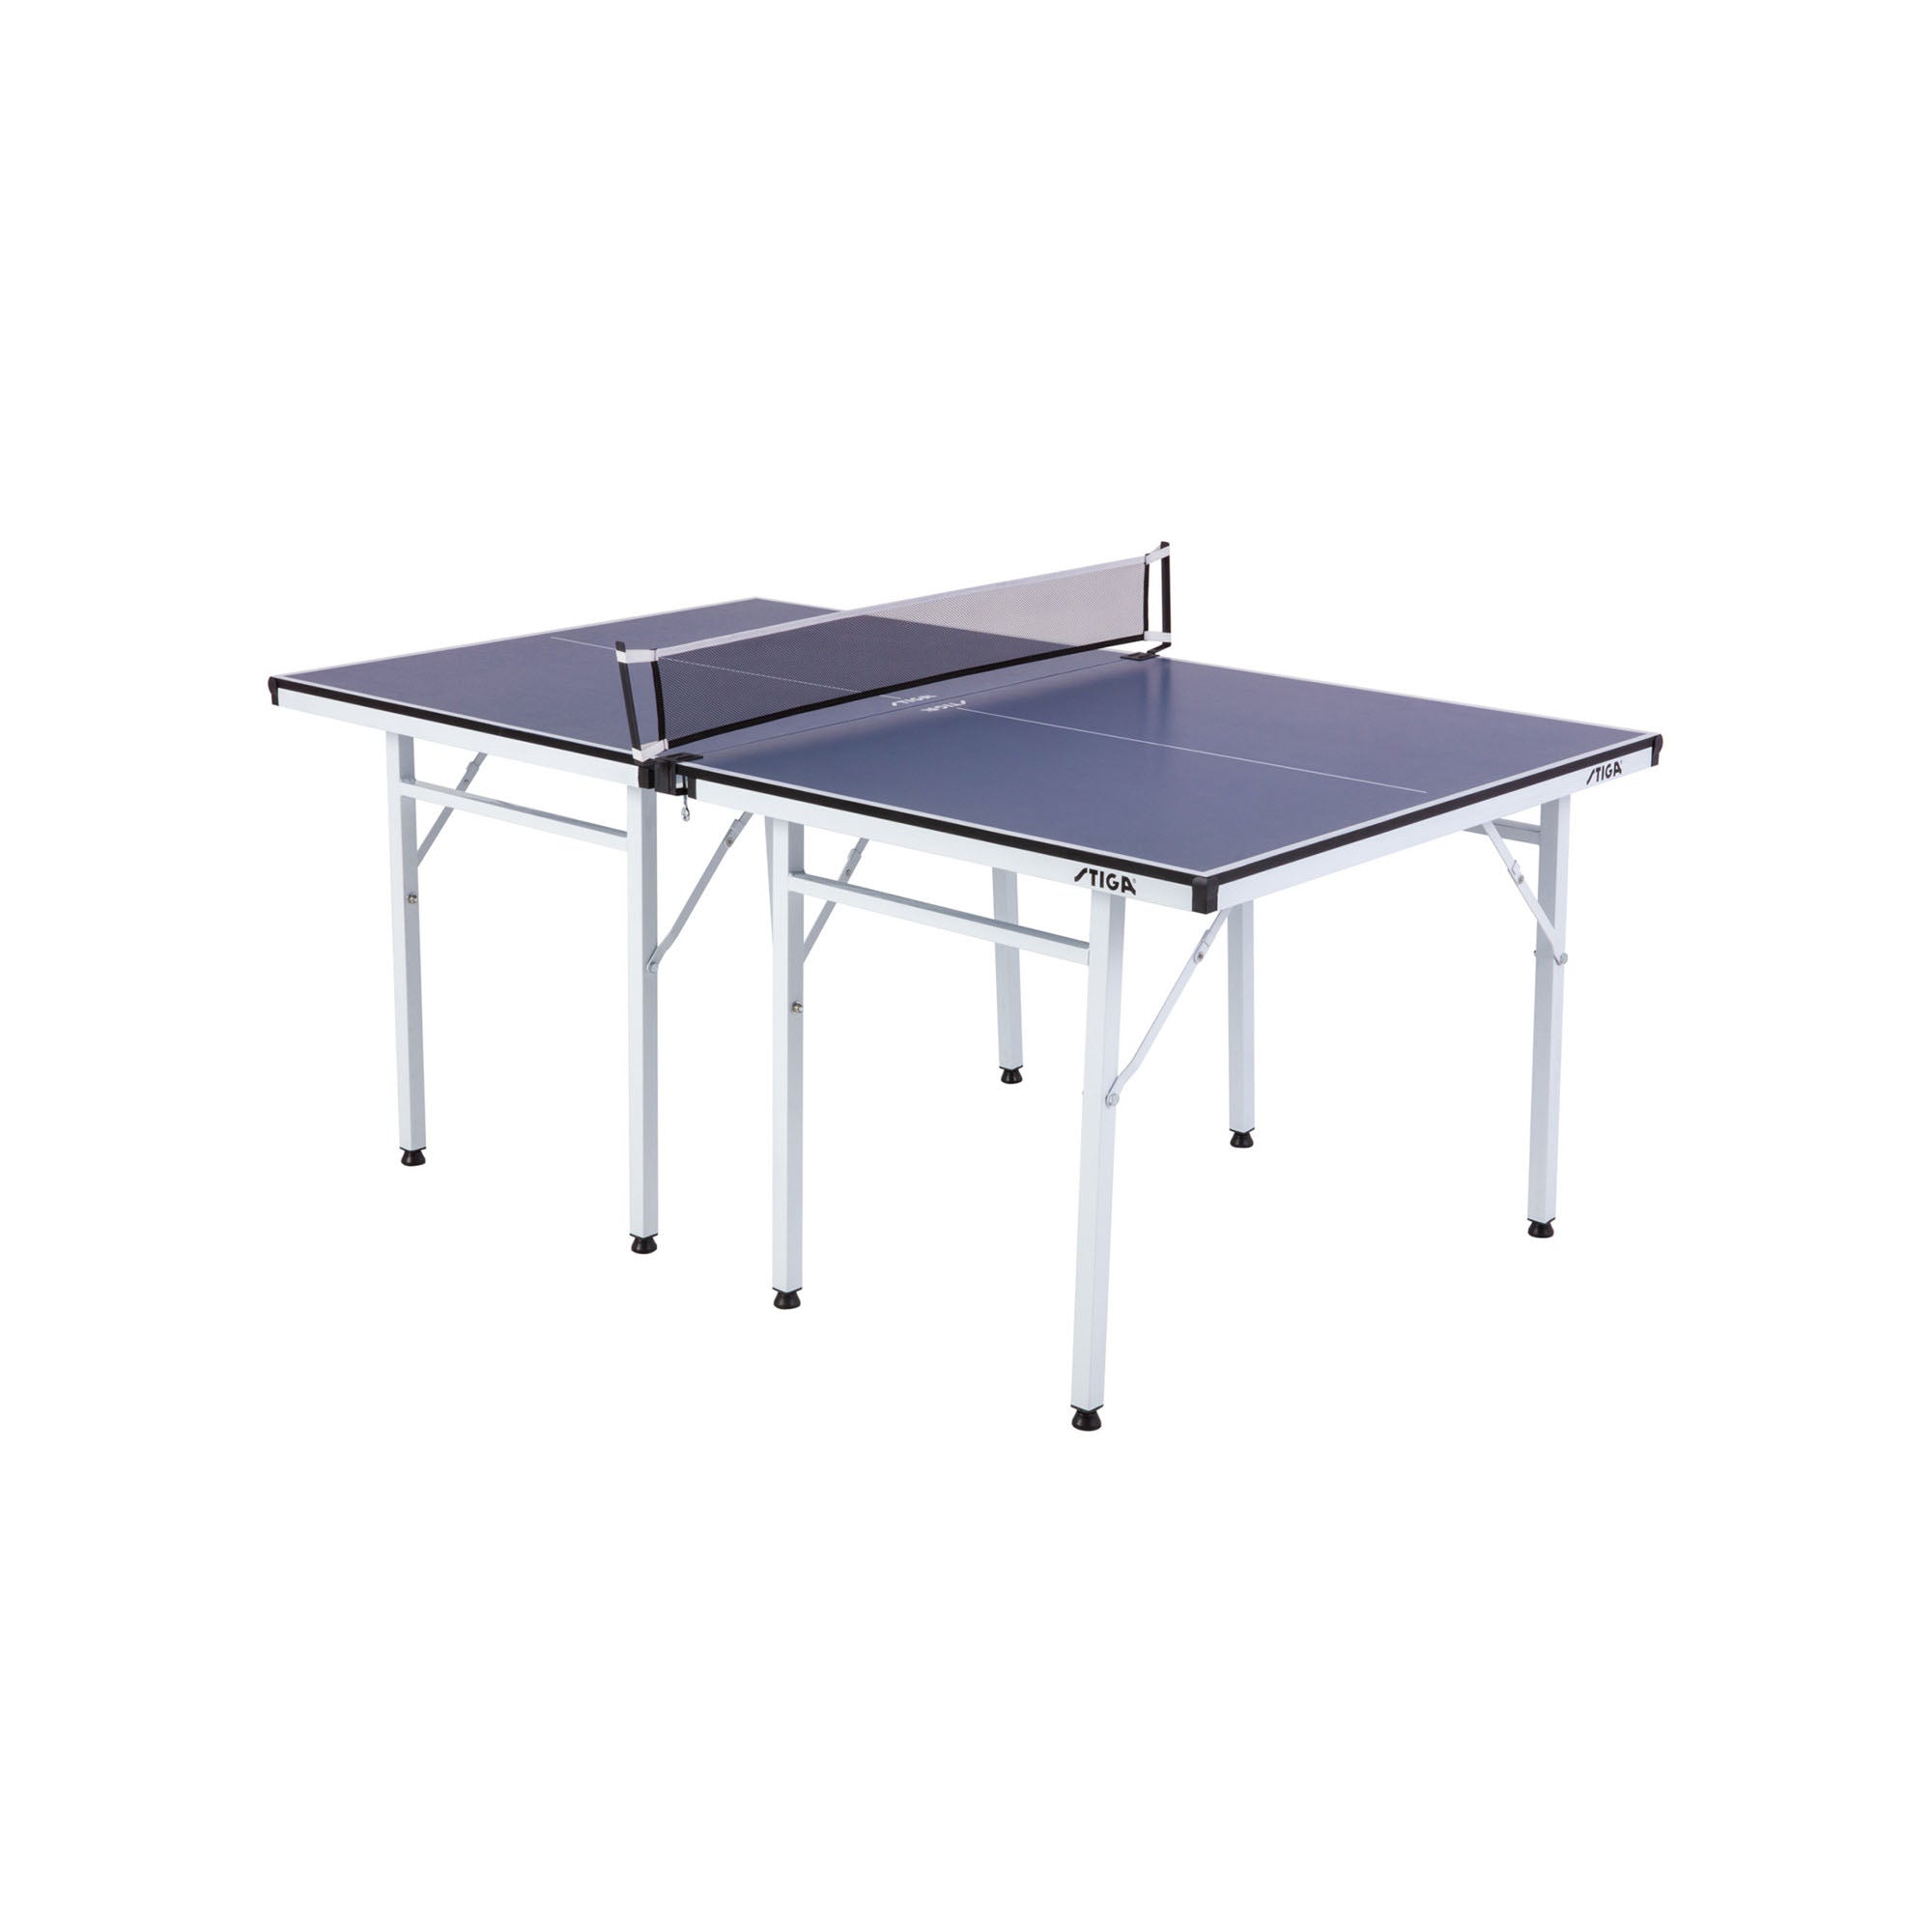 STIGA Blue Space Saver Small Ping Pong Table STIGA US